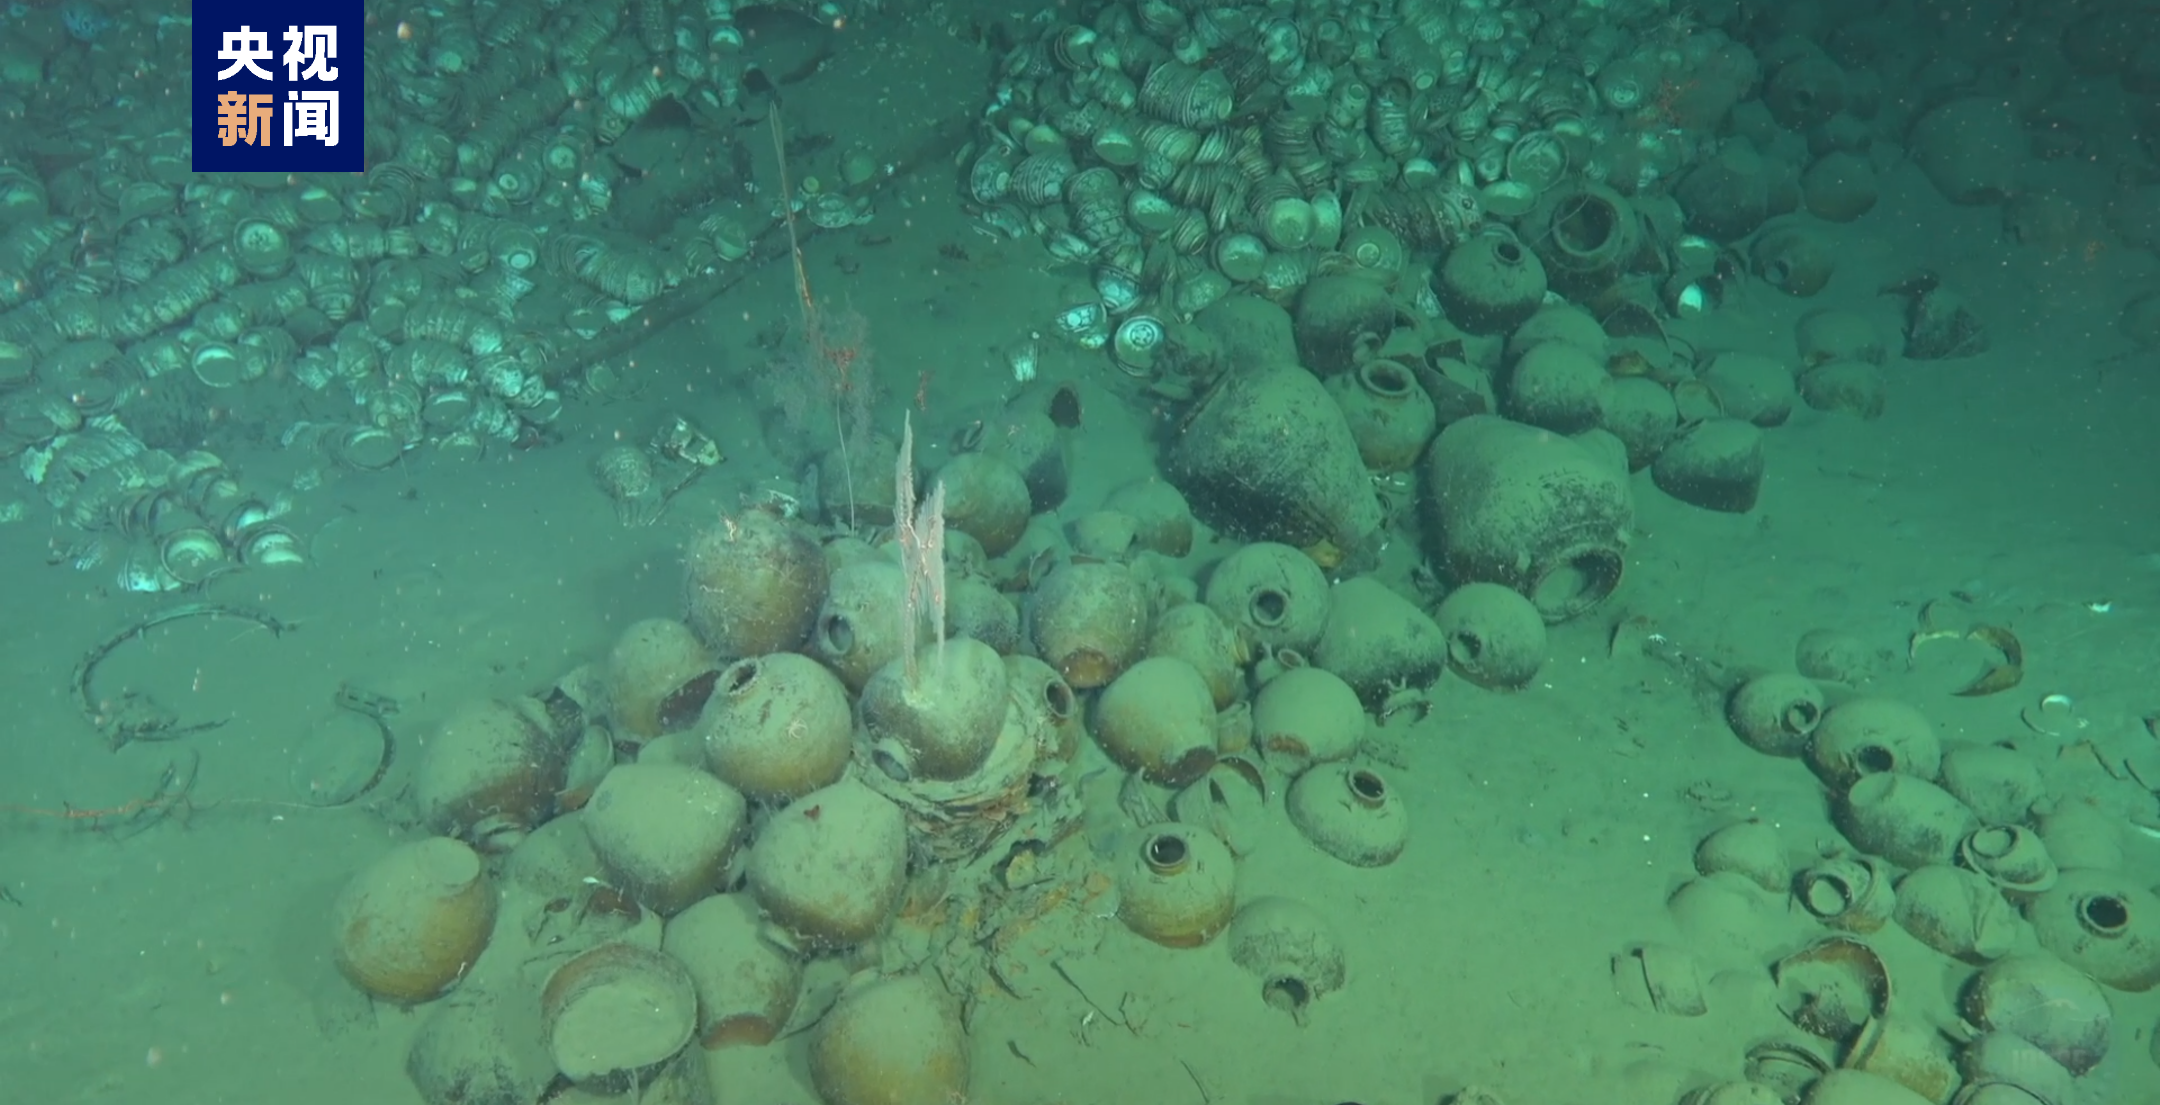 4K影像記錄丨水下千米級深度沉船遺址布放永久測繪基點 載人潛水器深入拍攝